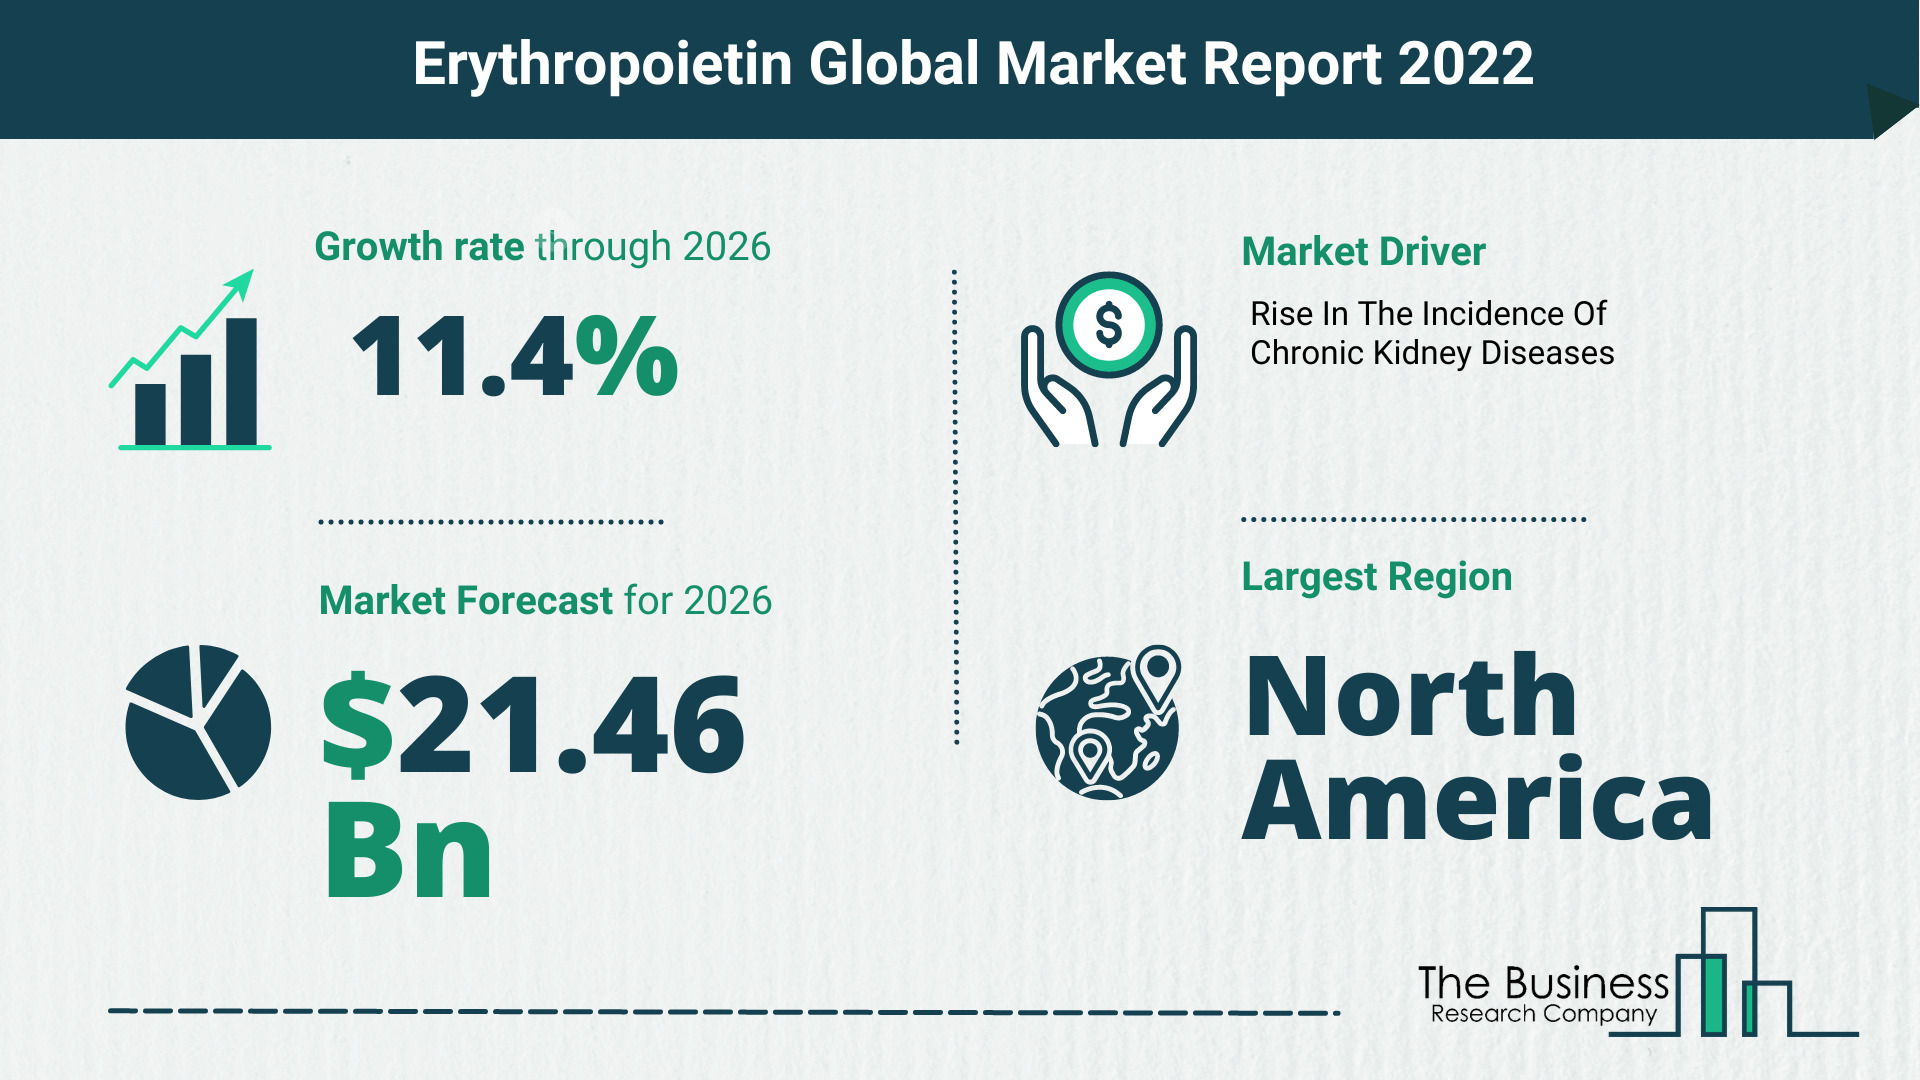 Global Erythropoietin Market